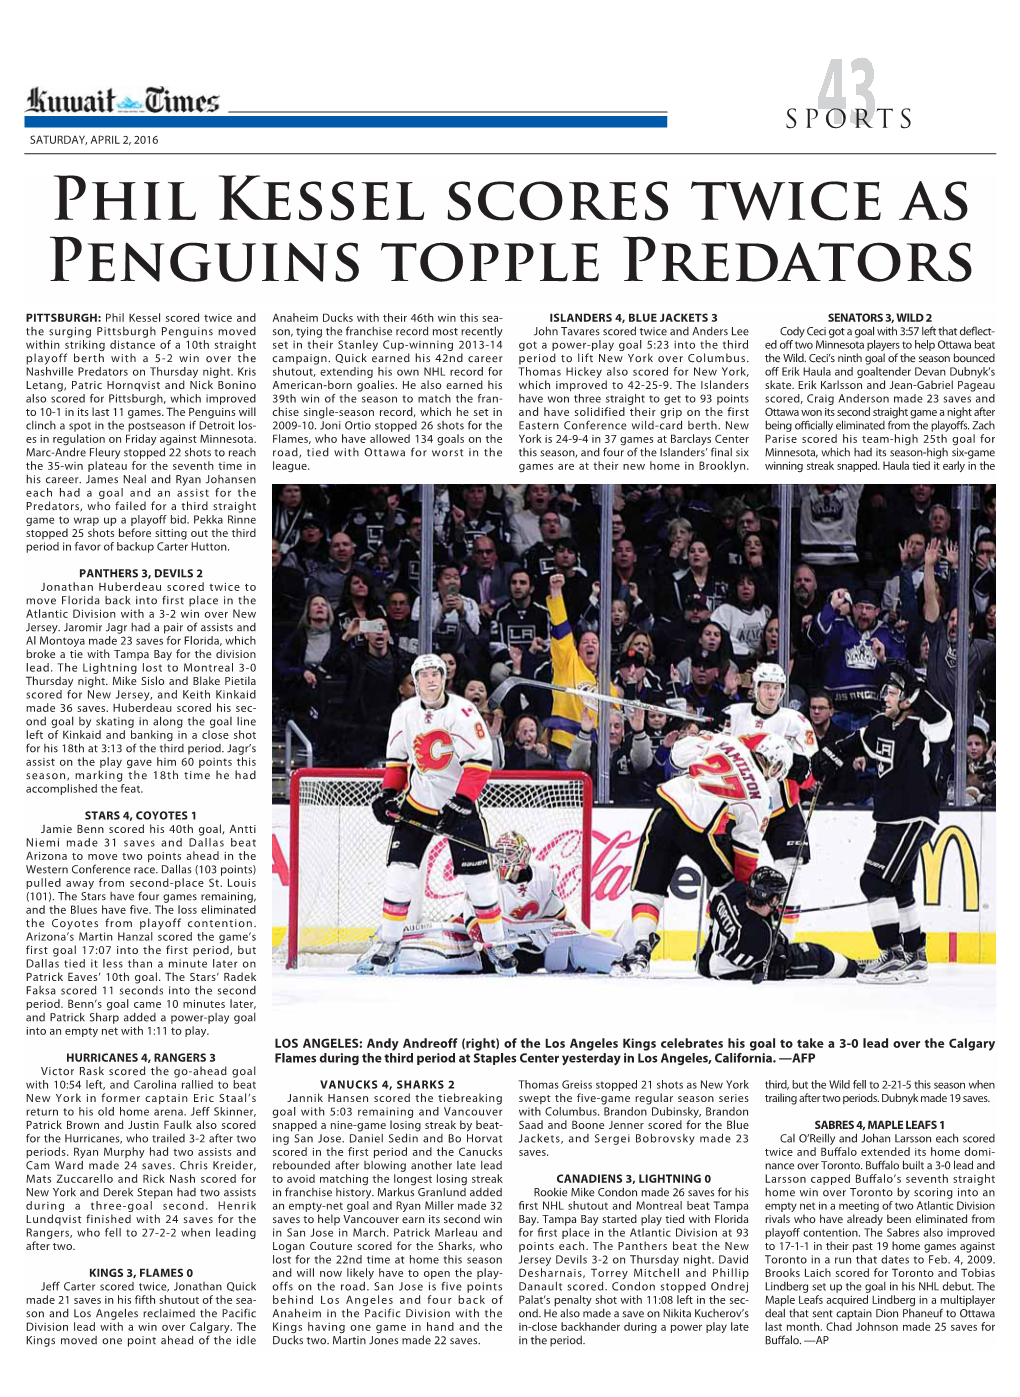 Phil Kessel Scores Twice As Penguins Topple Predators